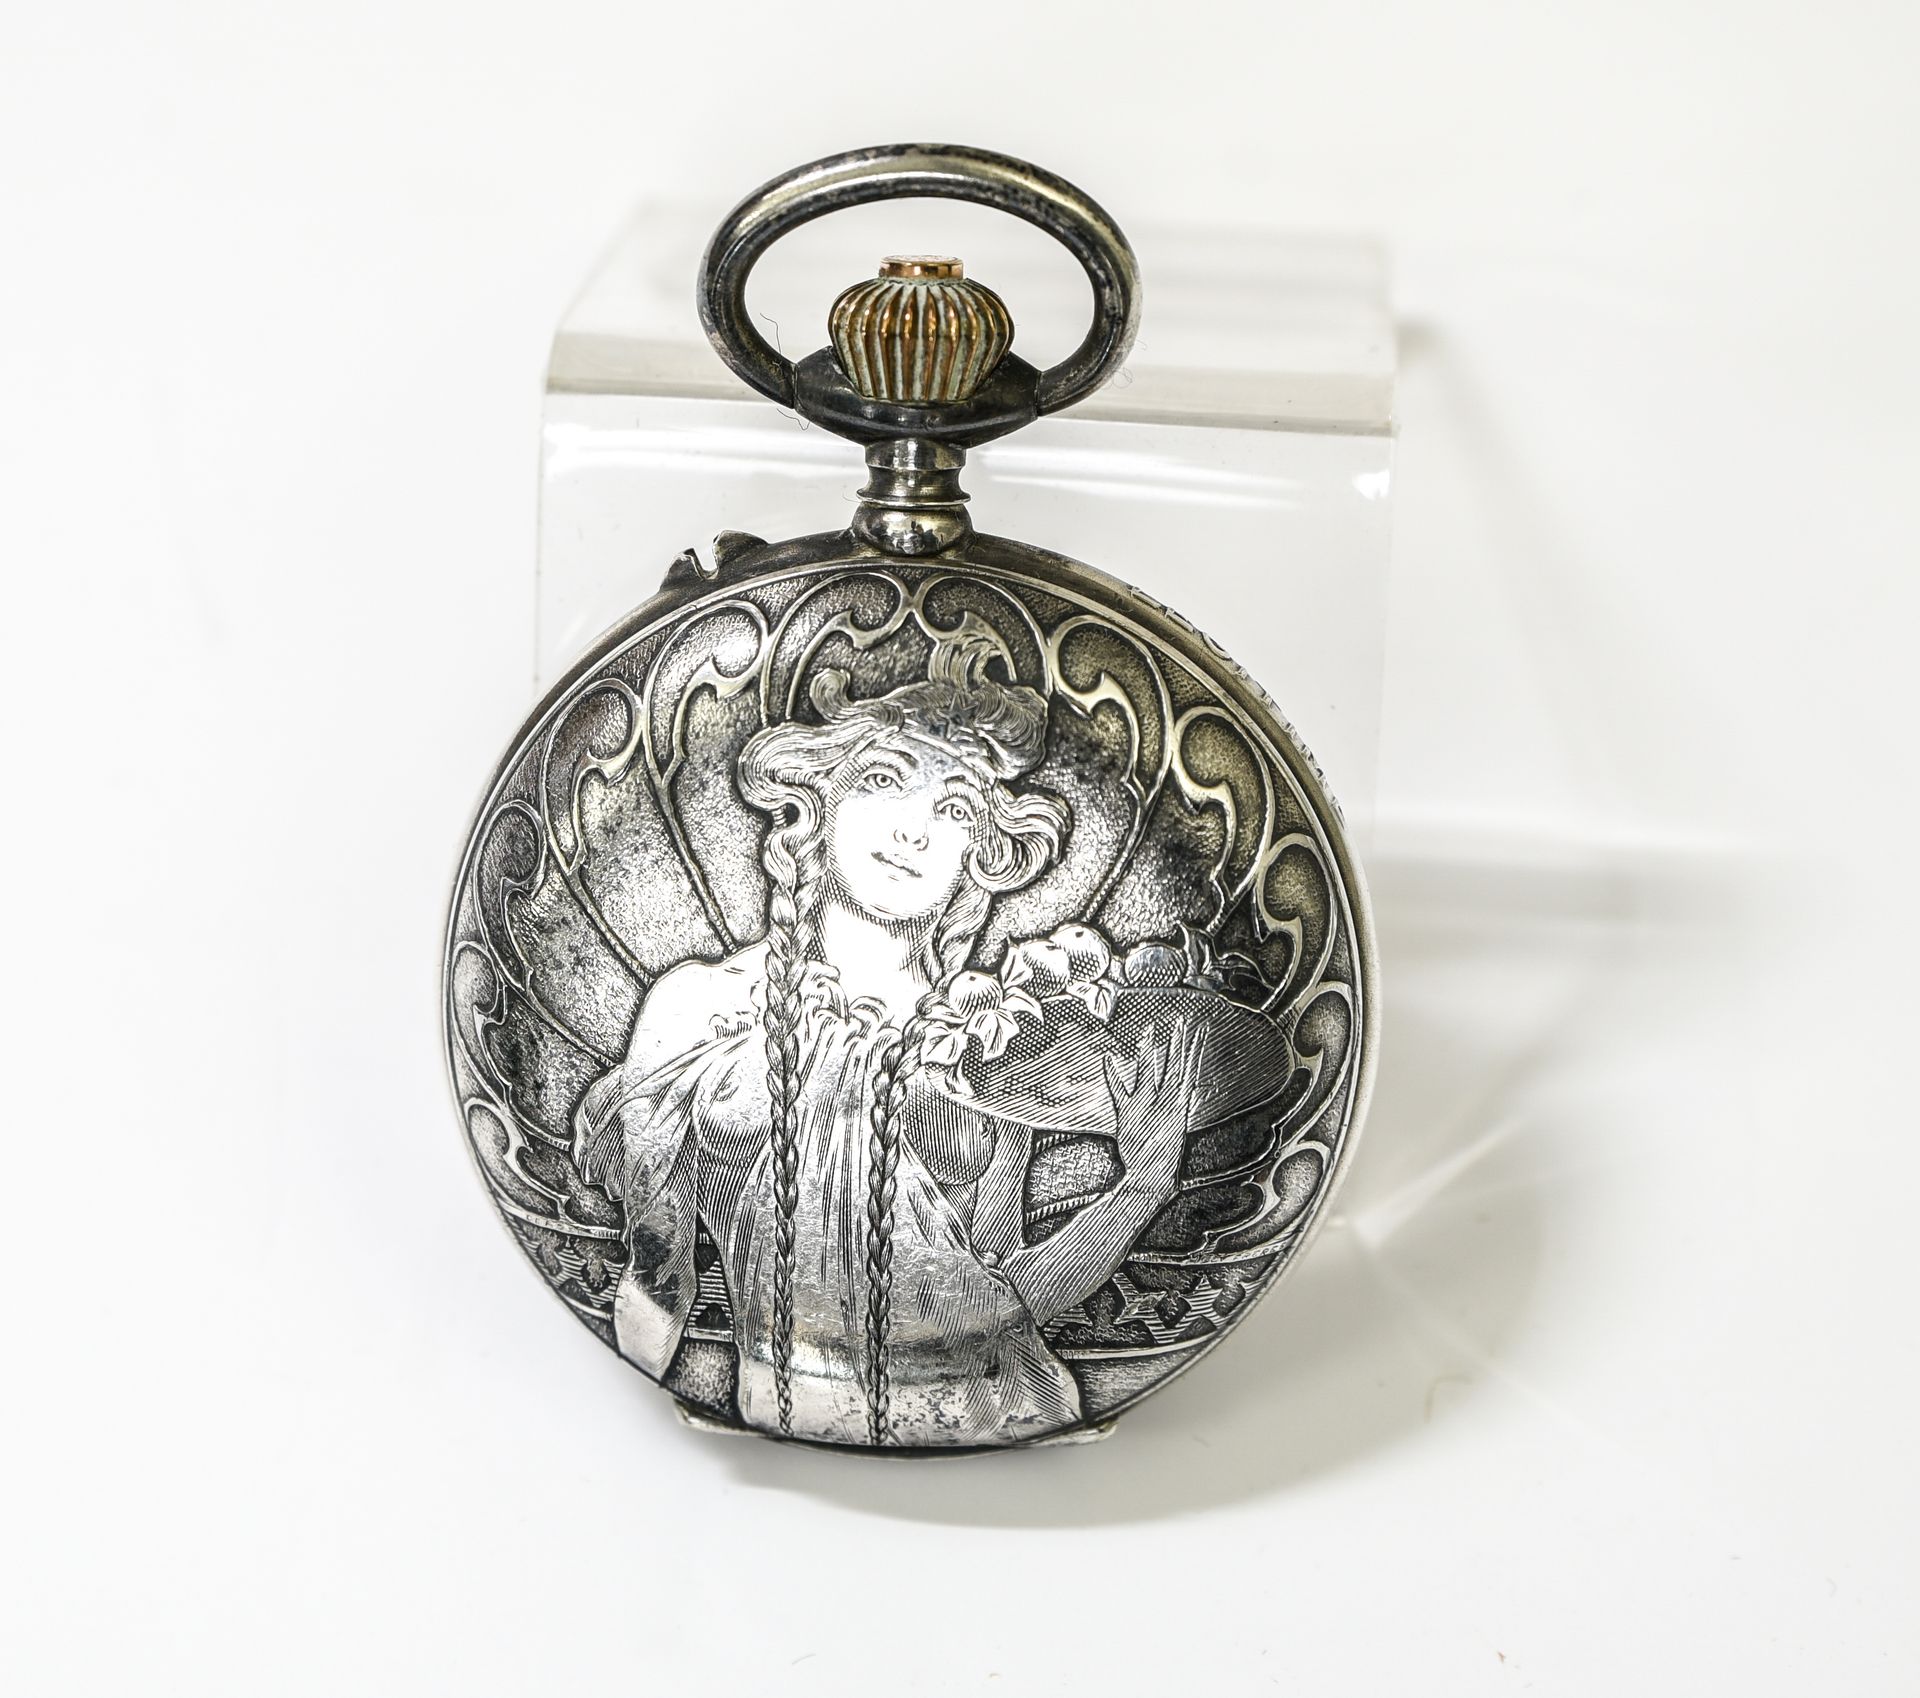 ROSKOPF ROSKOPF

Commemorative watch casing from the 1900 Paris World Expo.



S&hellip;